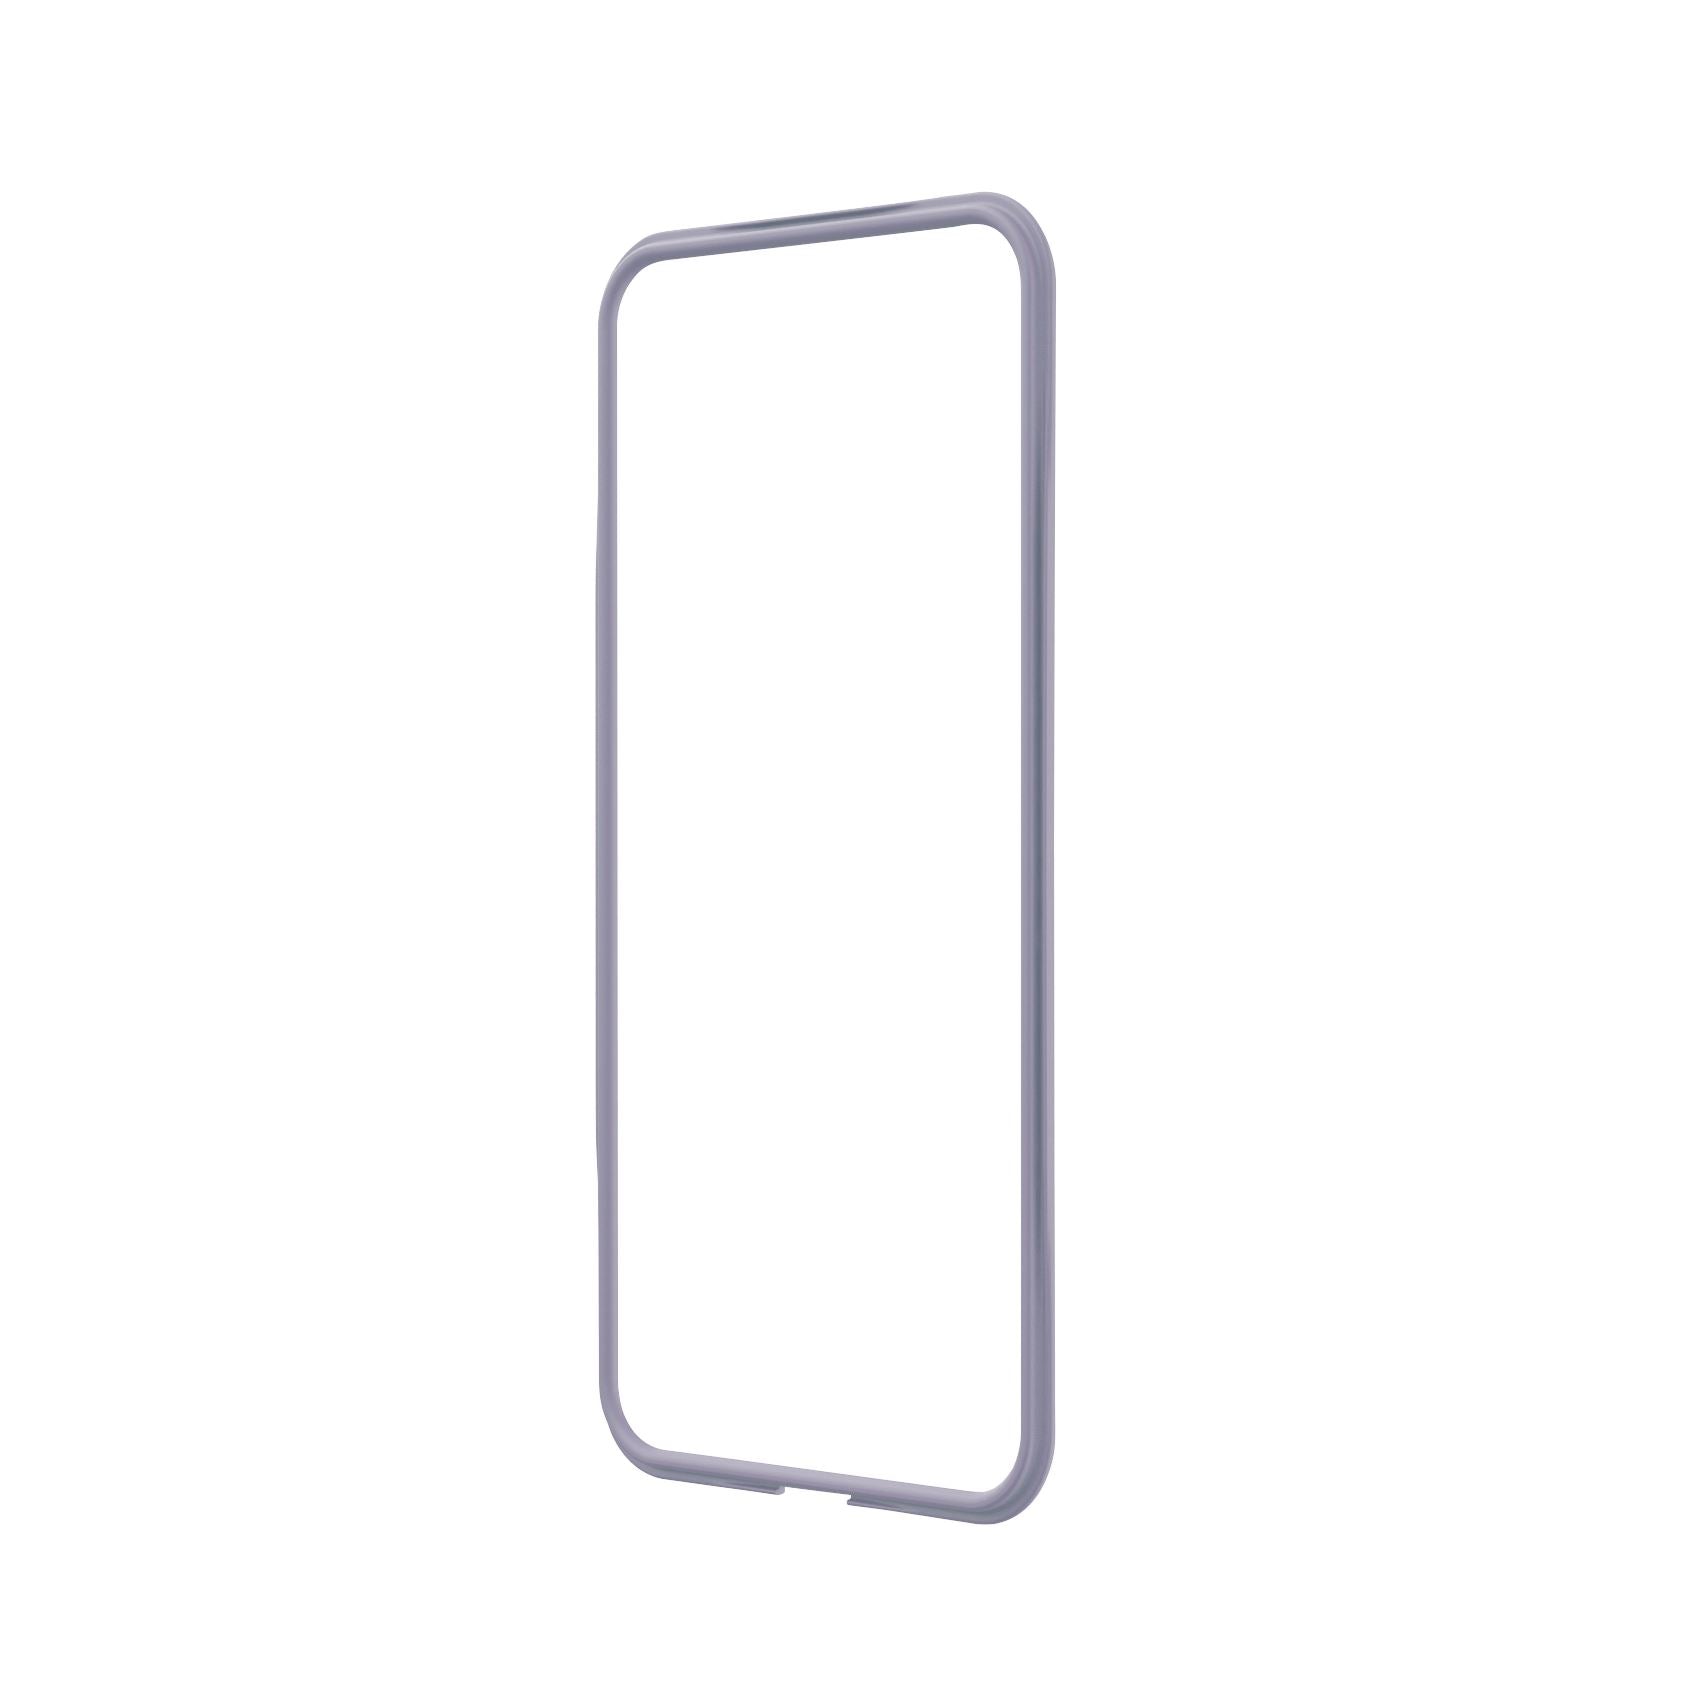 RhinoShield Mod NX Modular Case for iPhone 12 Series (2020) iPhone 12 Series RhinoShield iPhone 12/12 Pro 6.1" Lavender (Rim) 